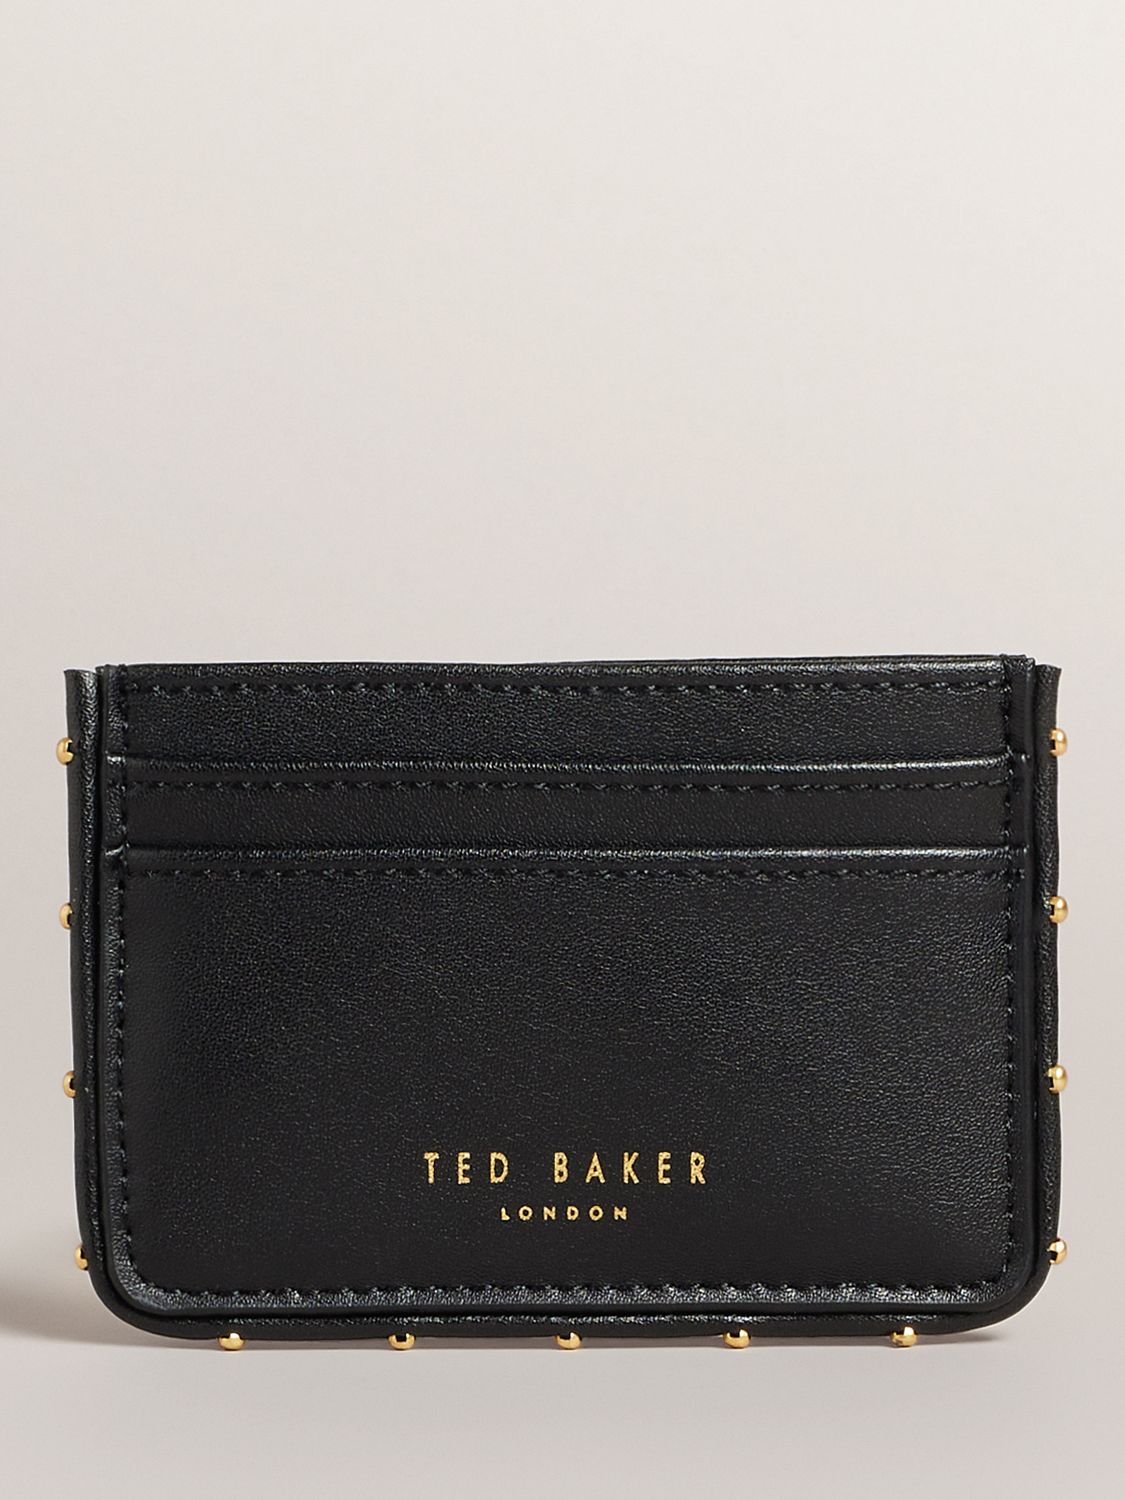 Ted Baker Kahnia Studded Edge Leather Cardholder, Black